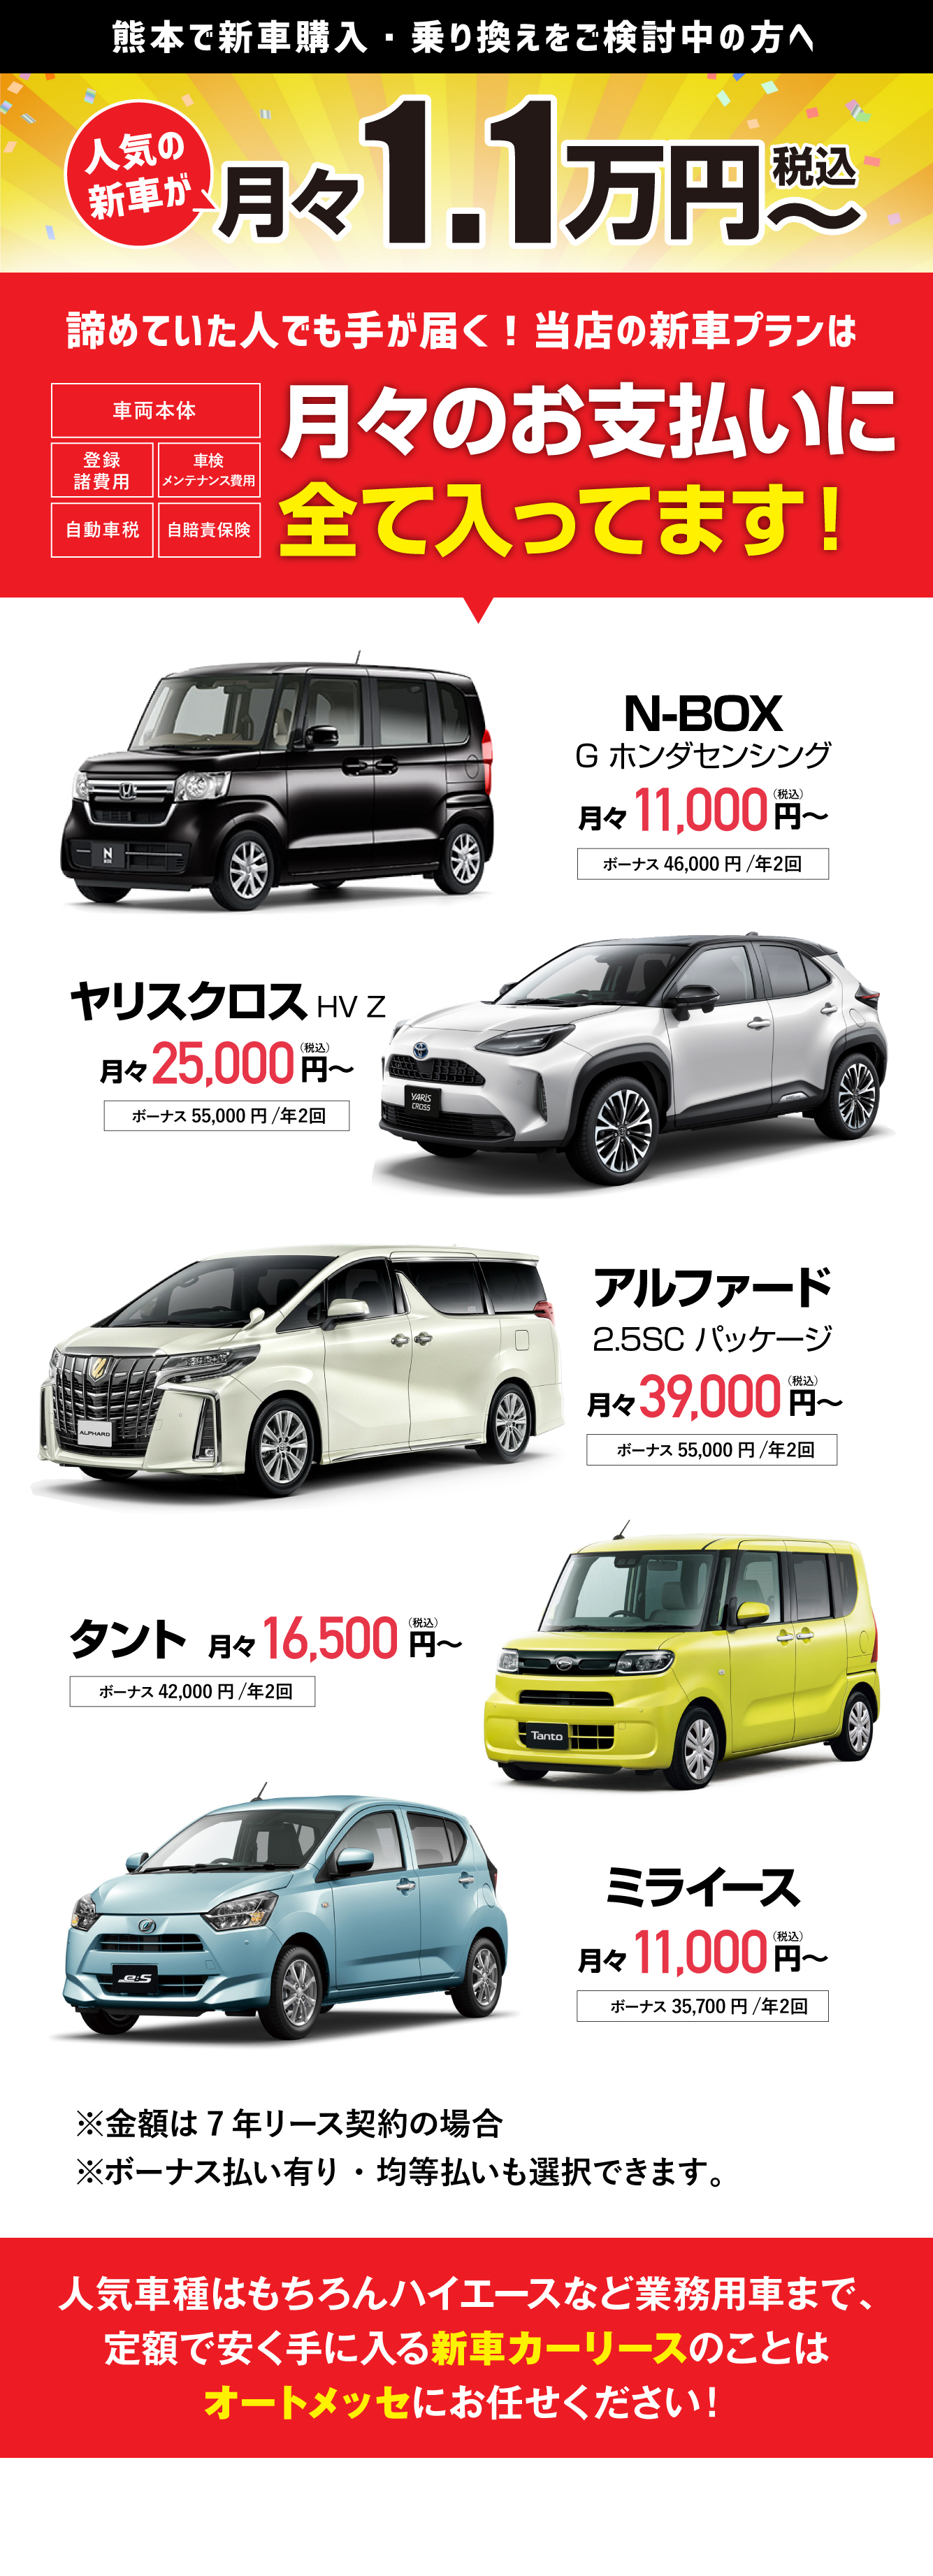 New Car オートメッセ 城東自動車 熊本県最大級の中古車展示 車検 整備 板金 新車もお任せ